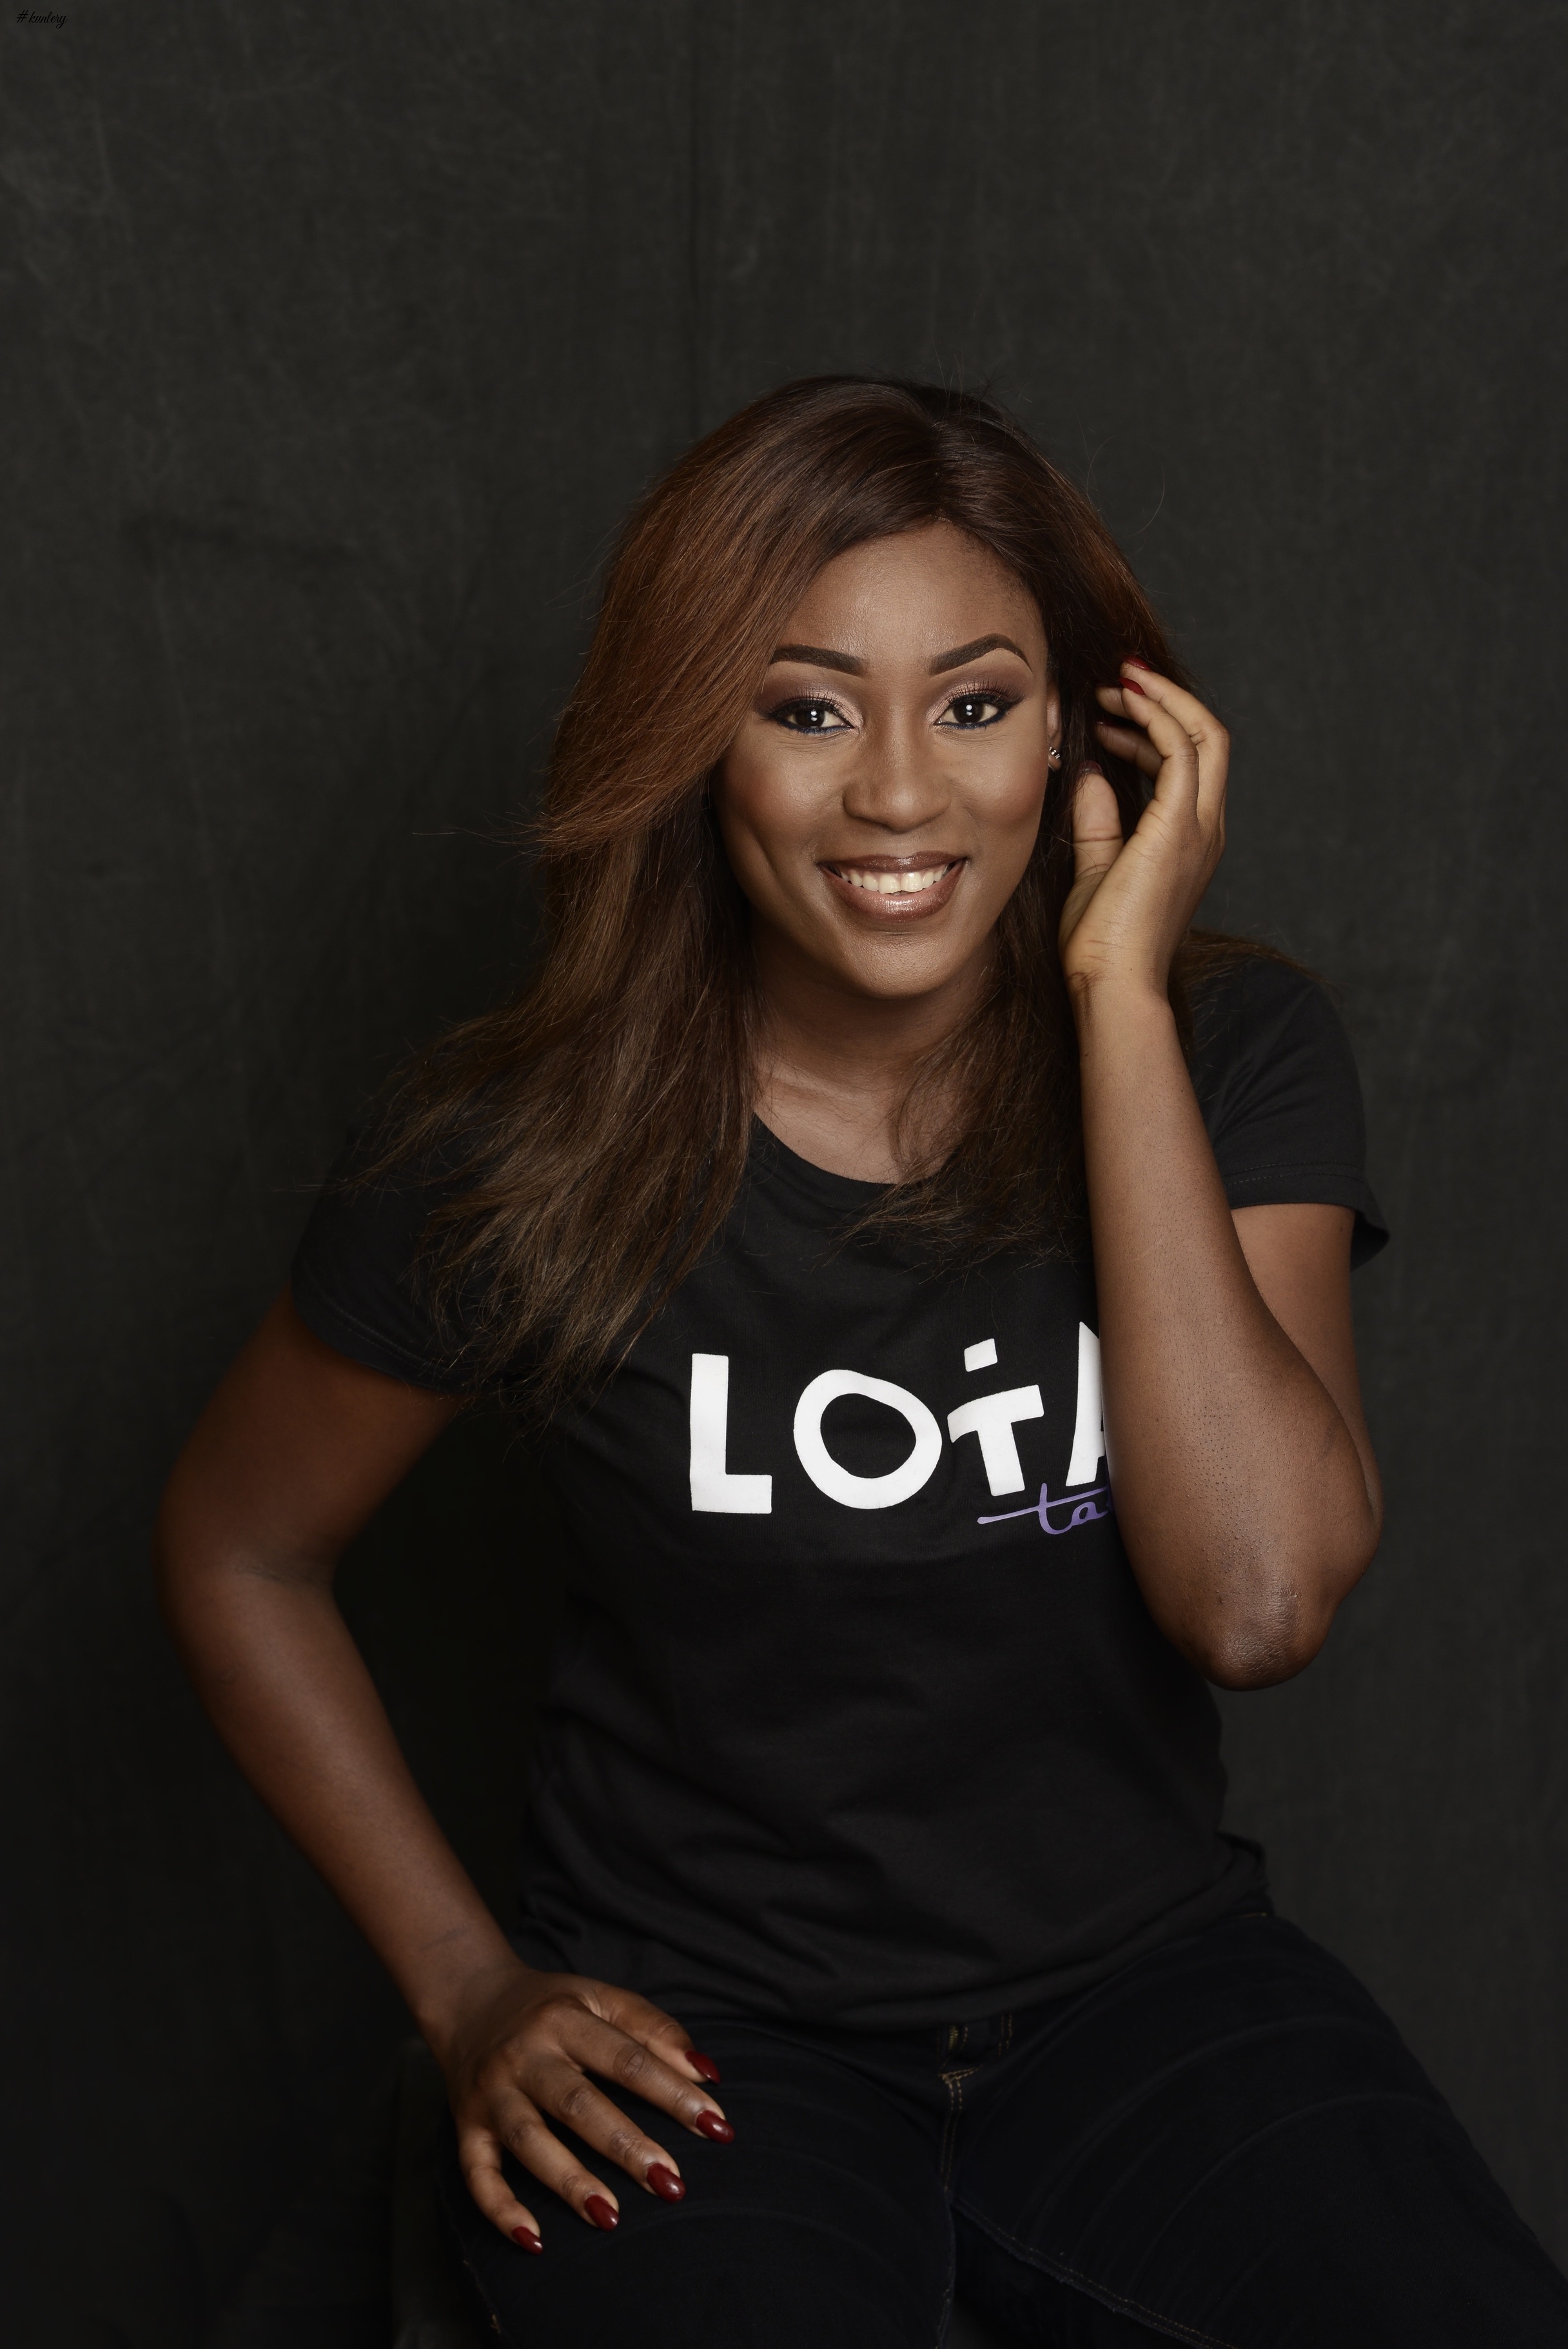 Nollywood Sweetheart Lota Chuwku Releases New Photos To Kickstart Her Food Show “Lota Takes”